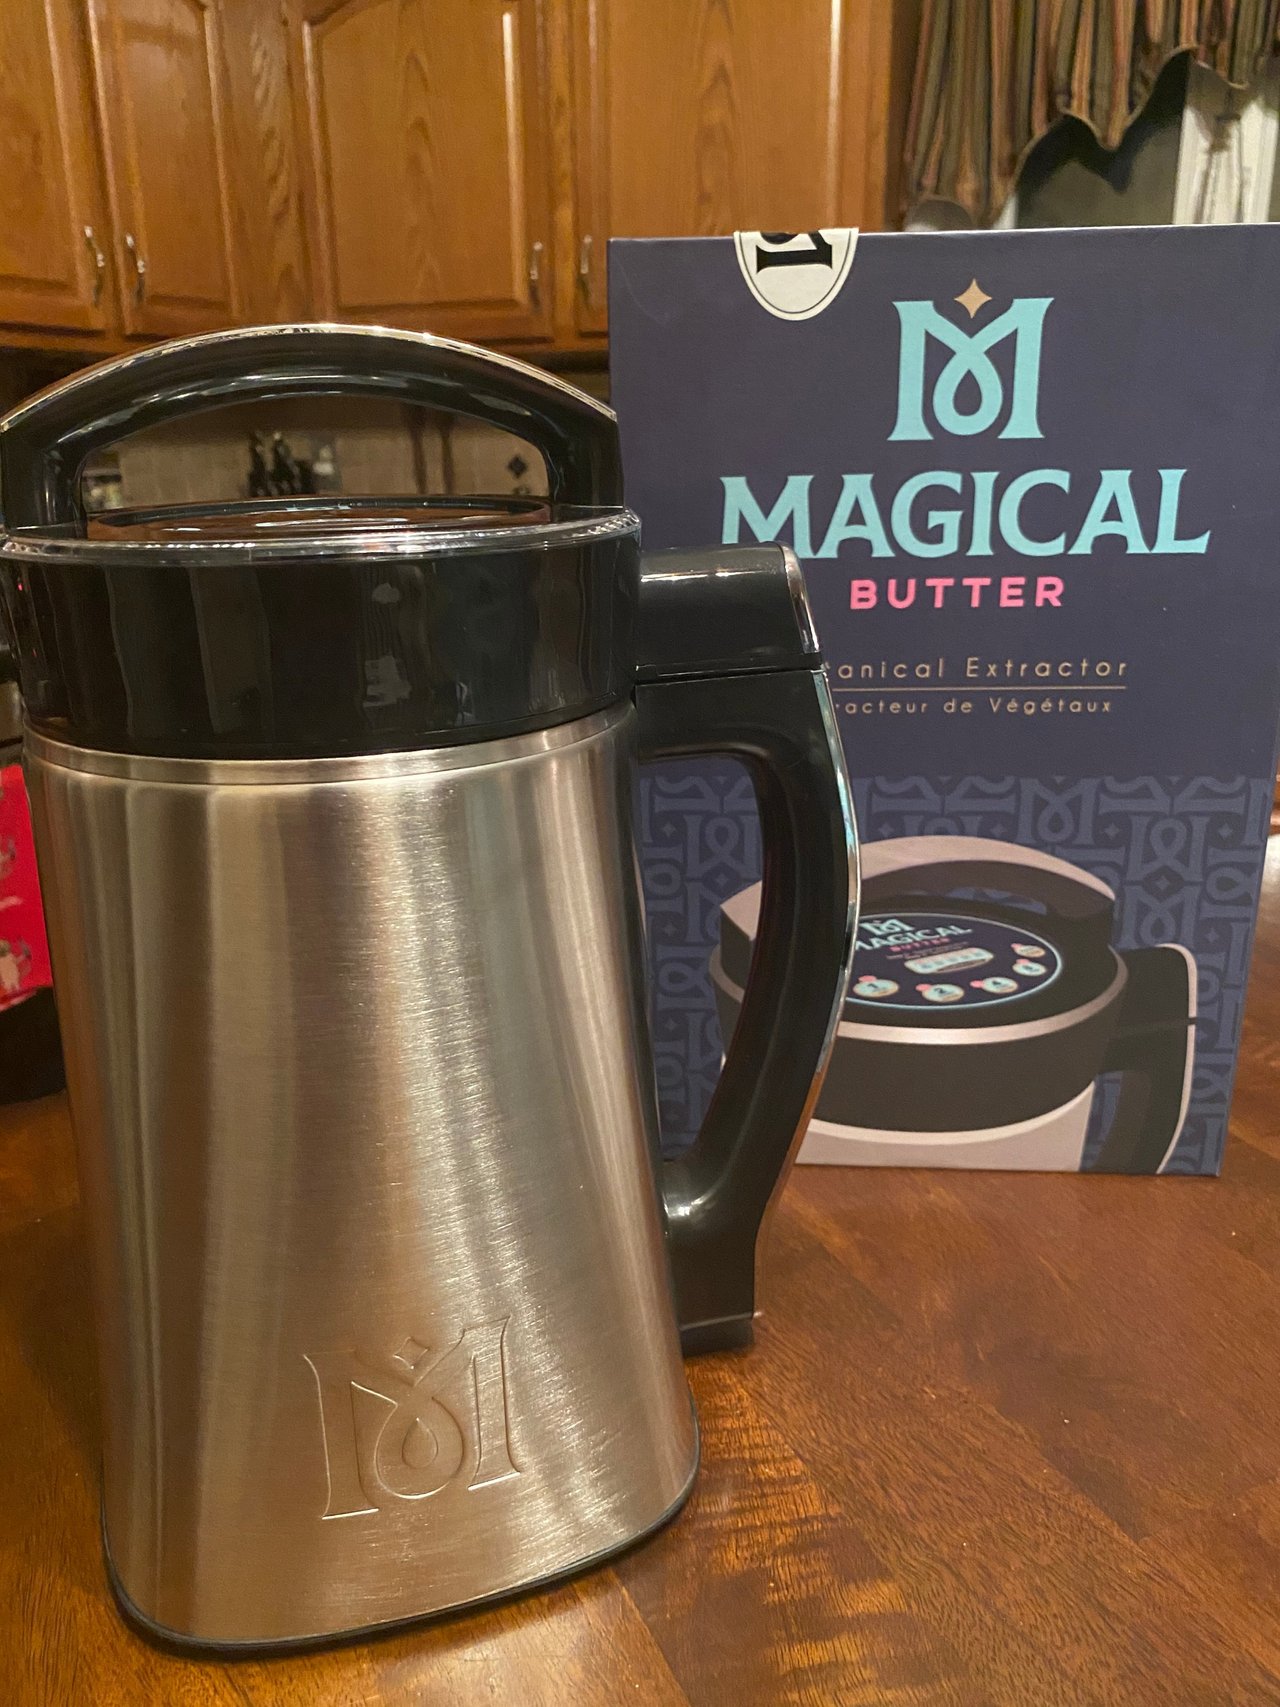 MagicalButter Magical Measuring Cups